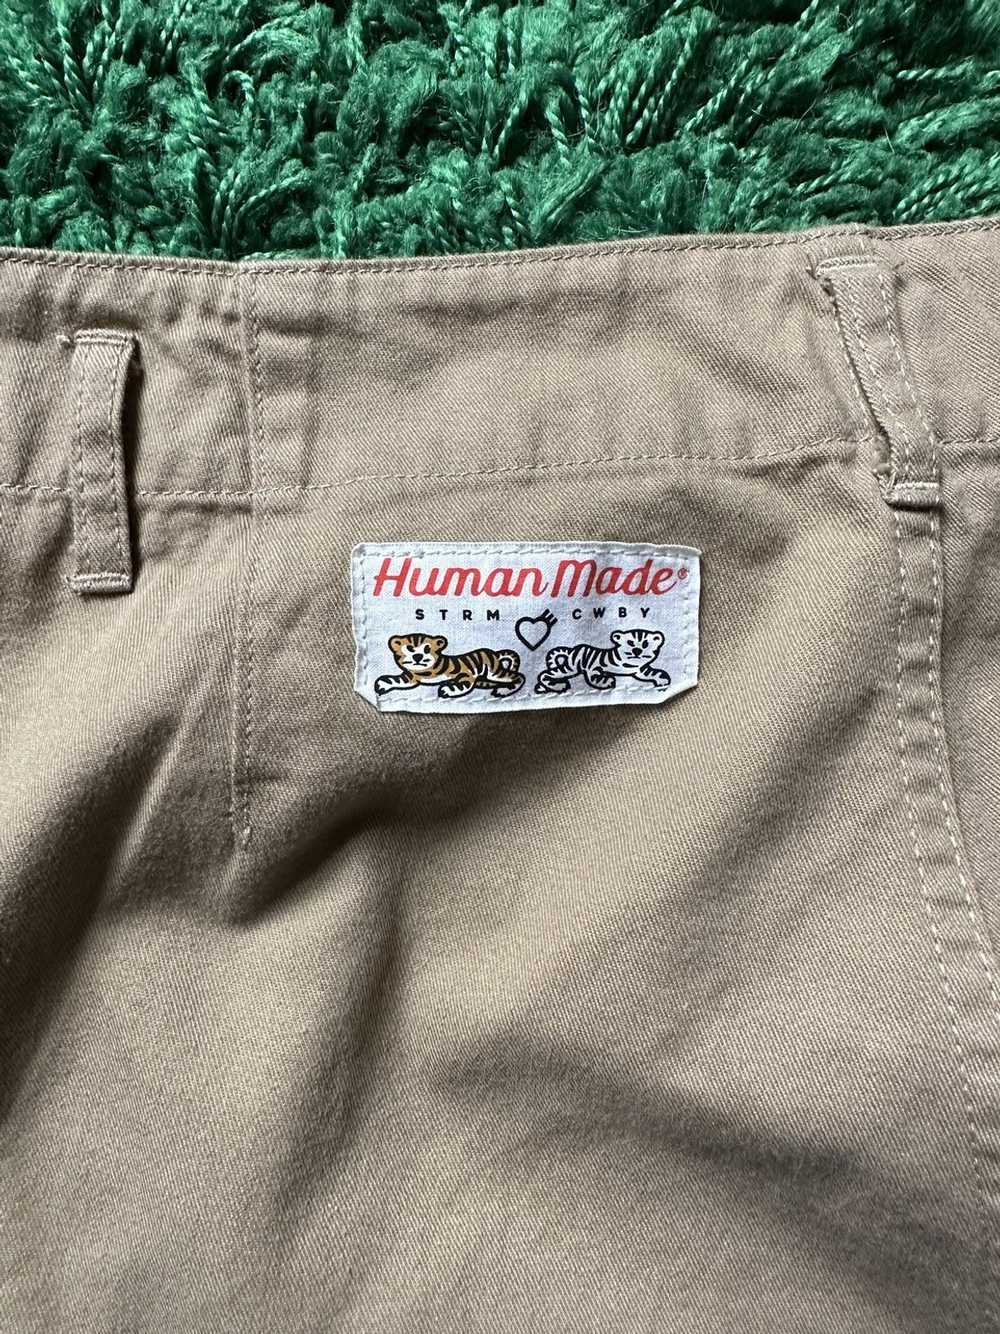 Human Made Human made beach pants - image 3